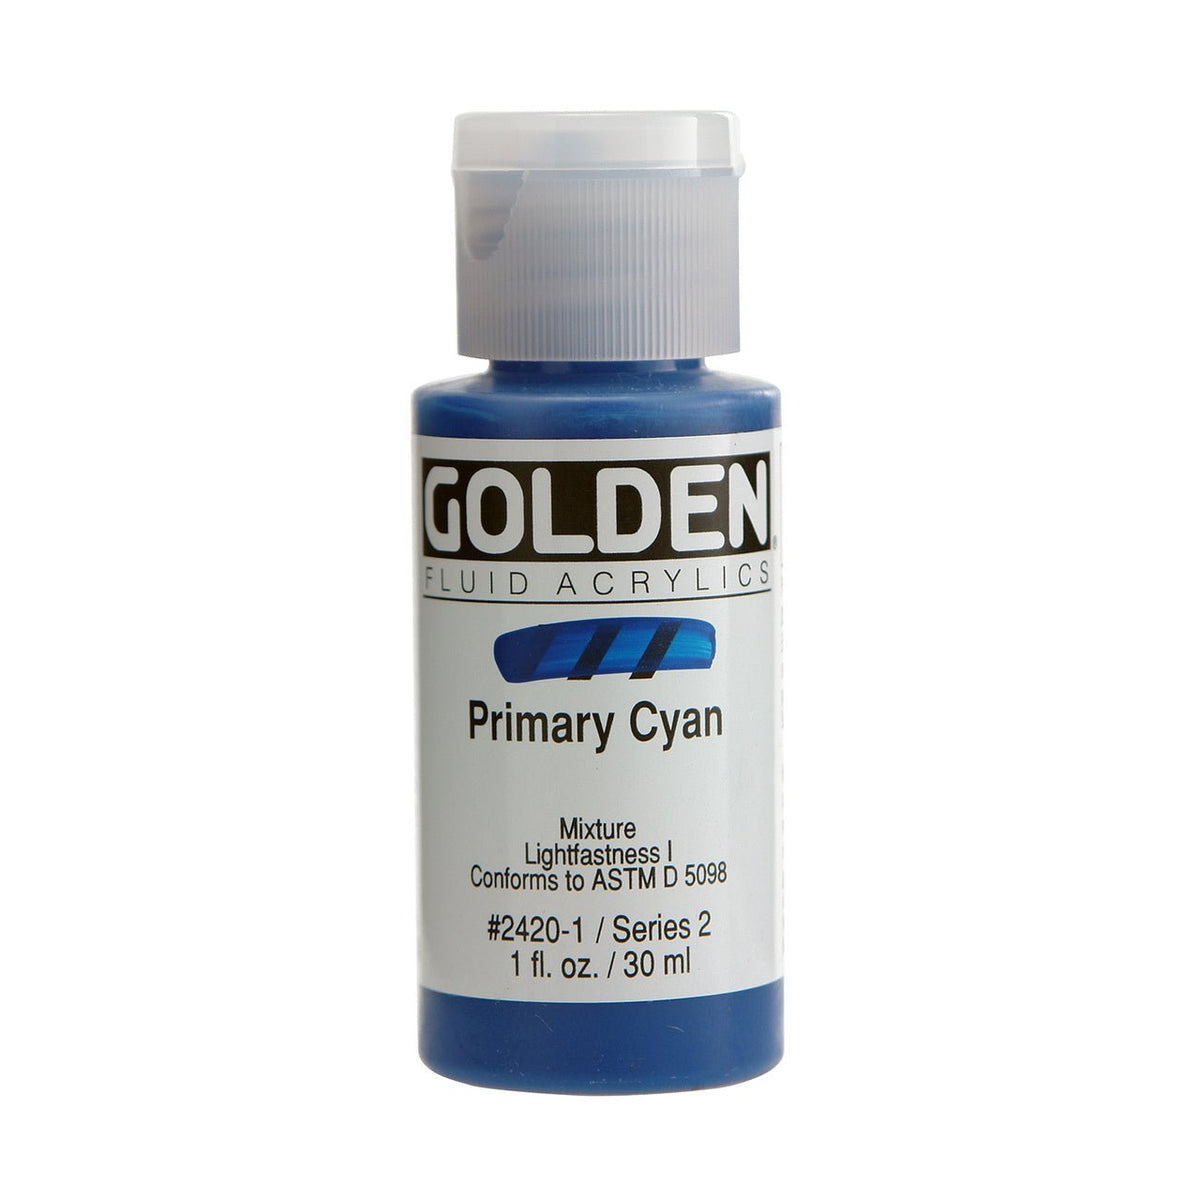 Golden Fluid Acrylic Primary Cyan 1 oz - merriartist.com